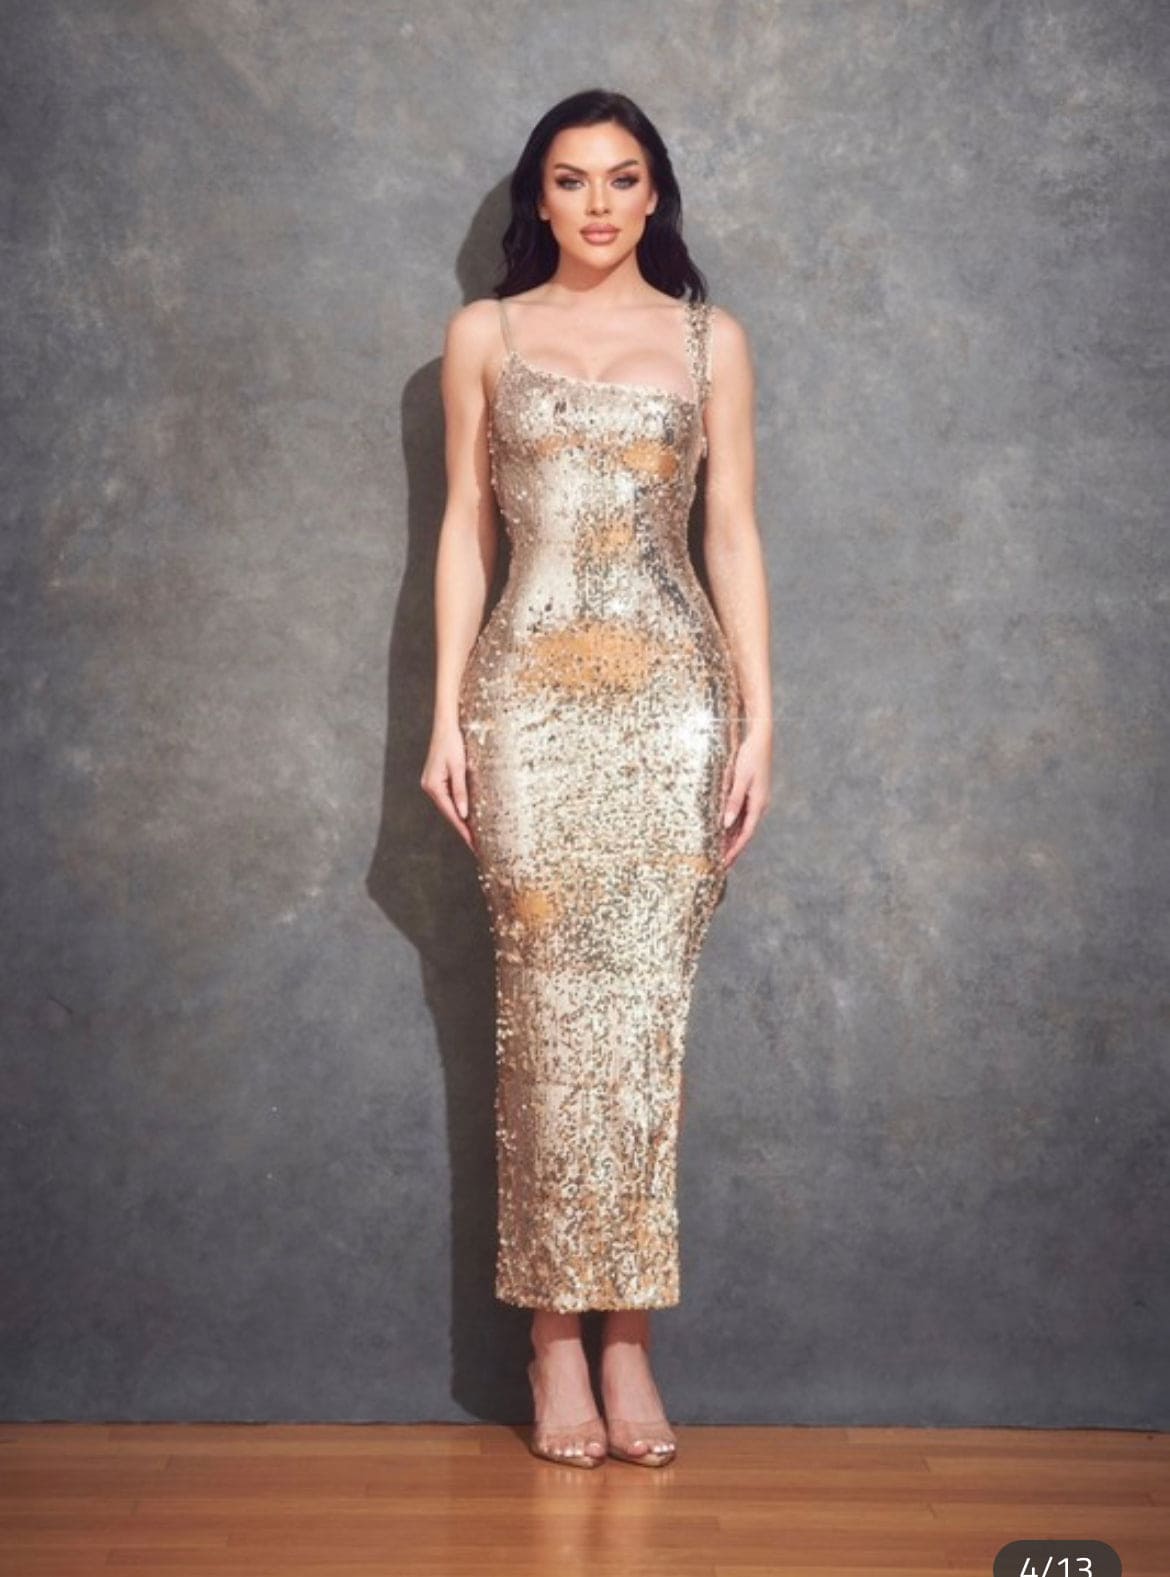 "Gilded Glamour: Sparkling Sequin Gold Dress"